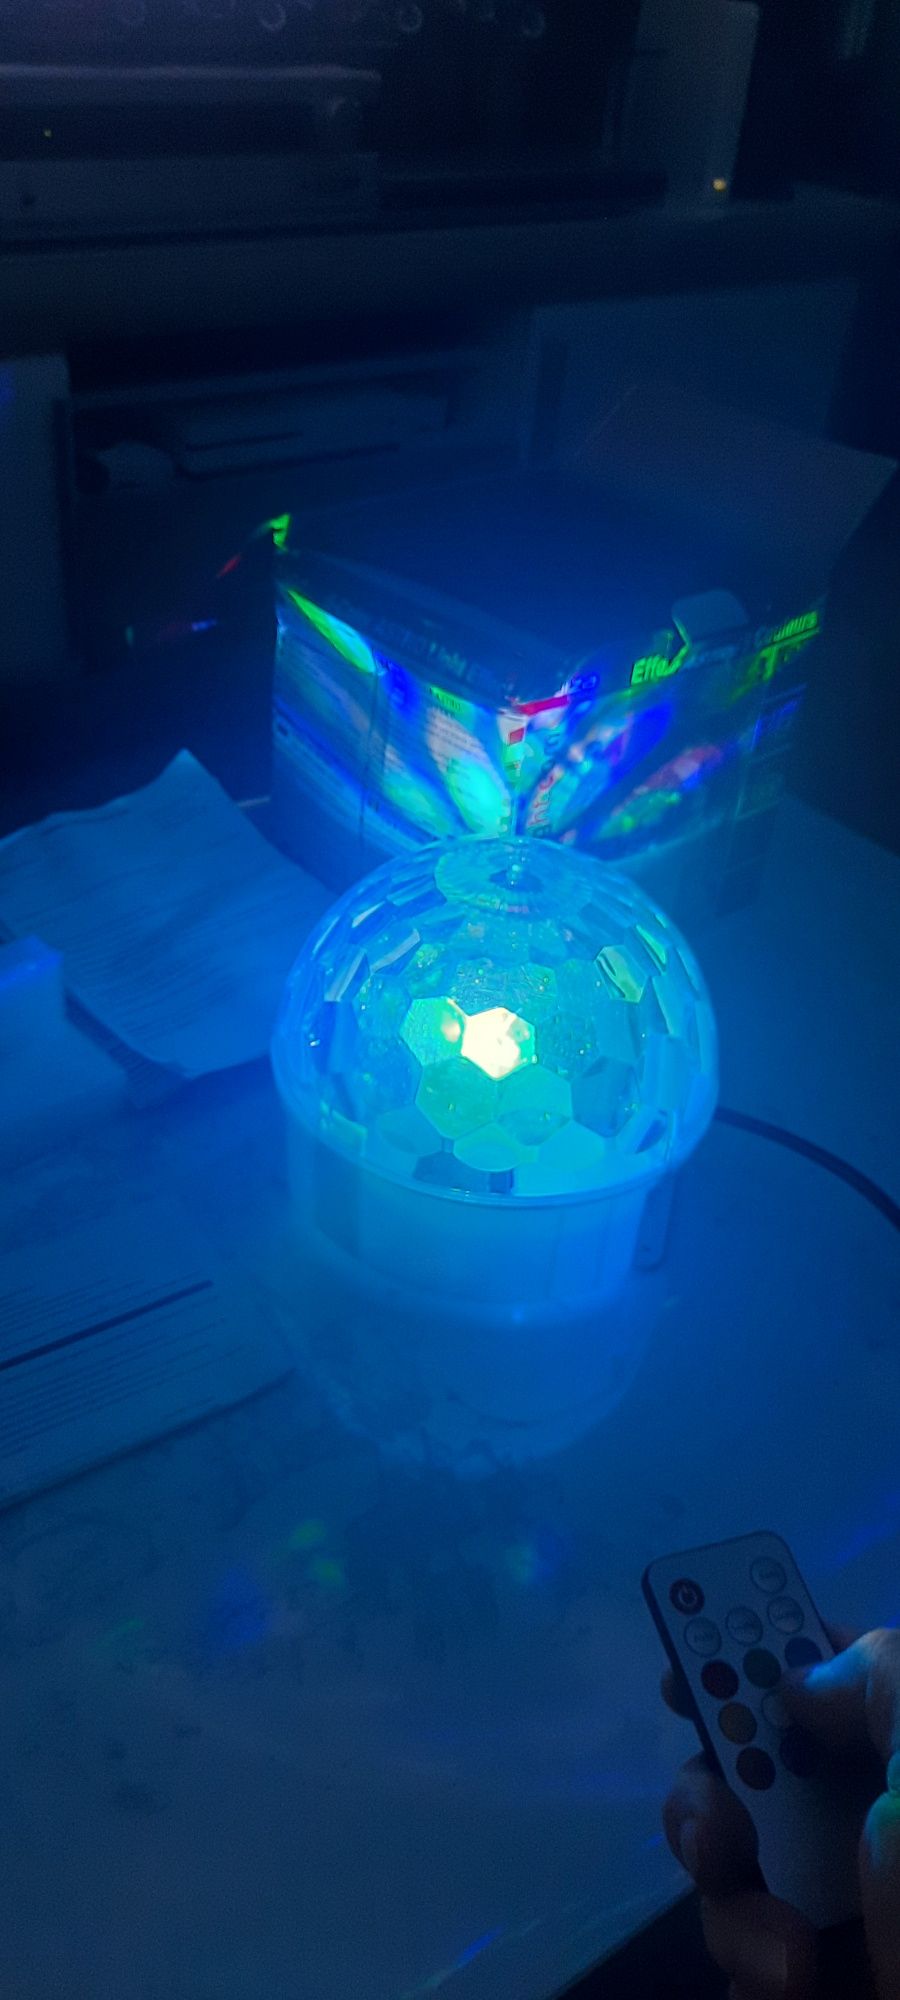 Kula lustrzana Ibiza Light ASTRO 9C-RC RGB Efekt Strobo